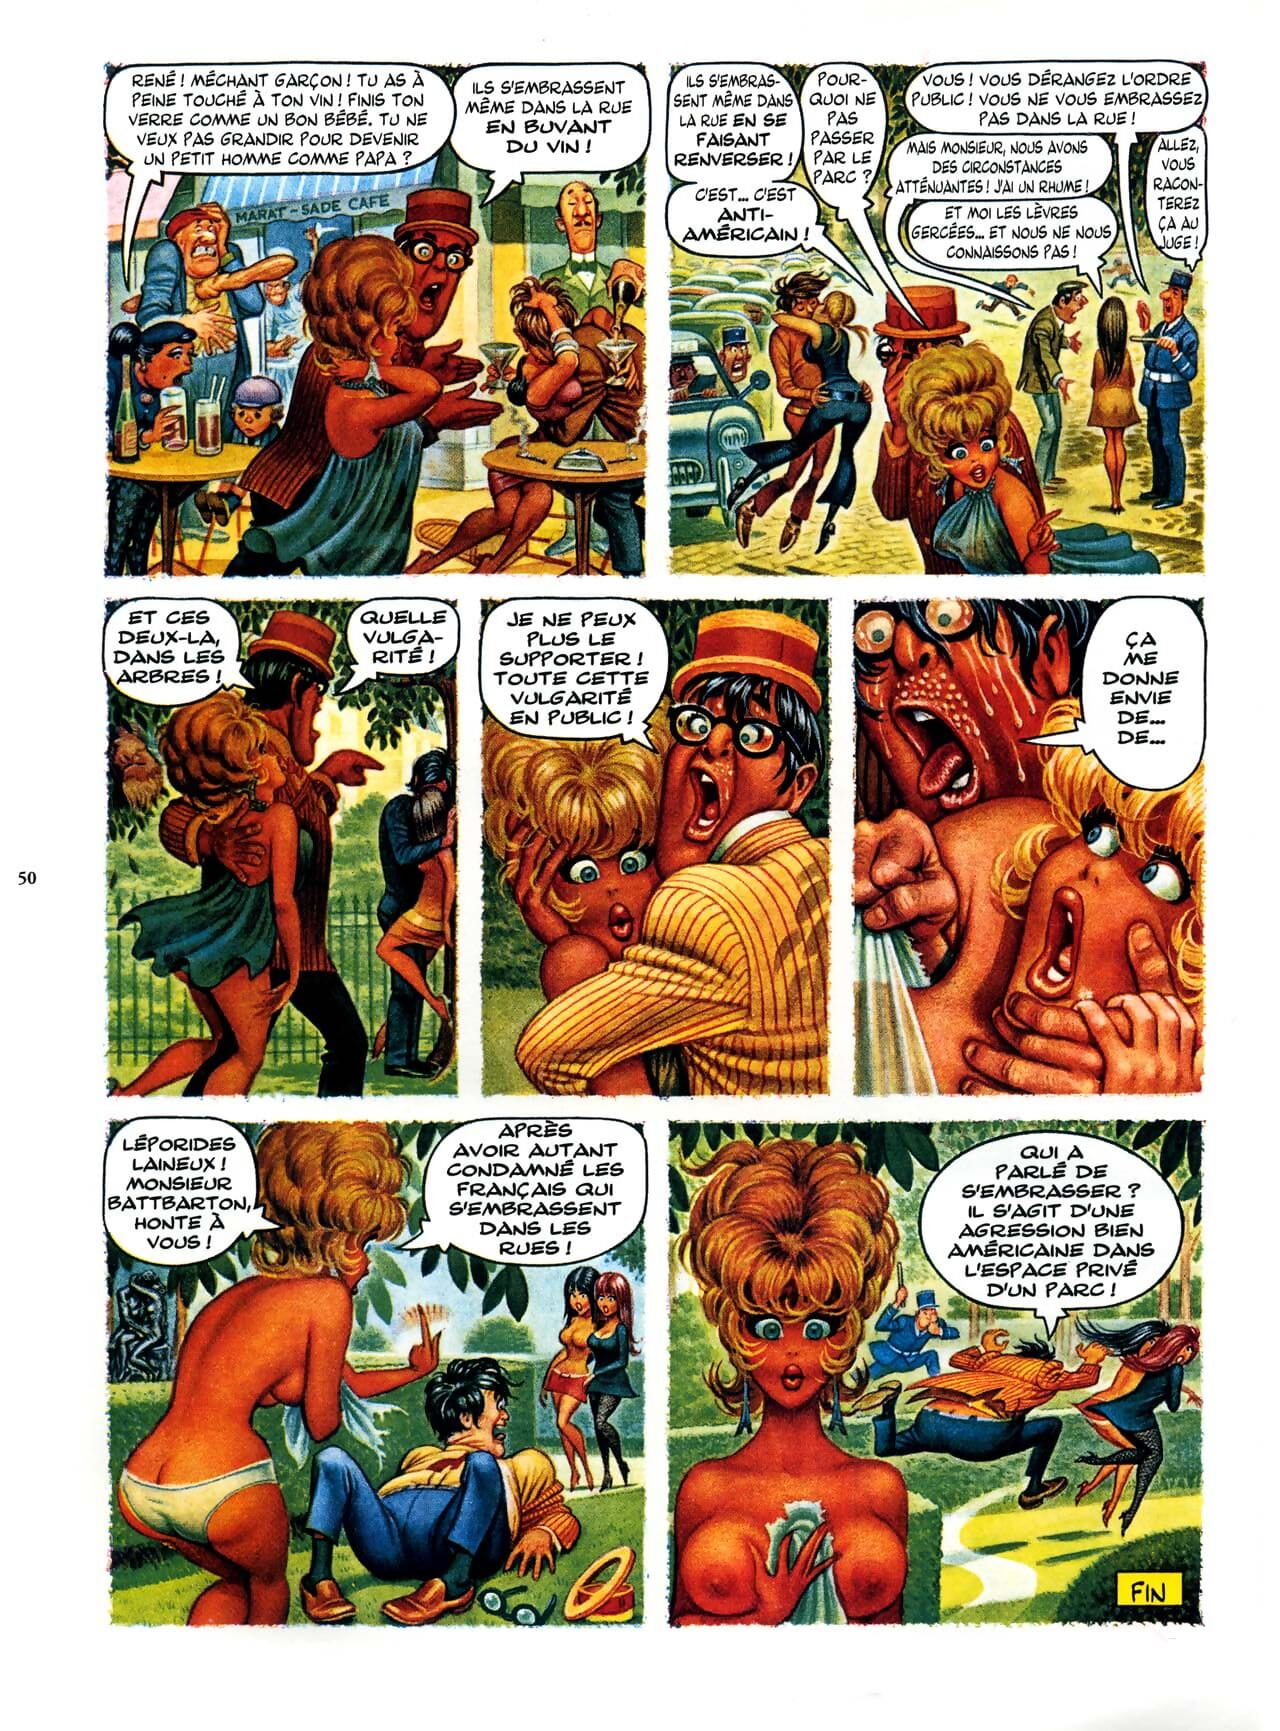 Playboys Little Annie Fanny Vol. 2 - 1965-1970 - part 3 page 1